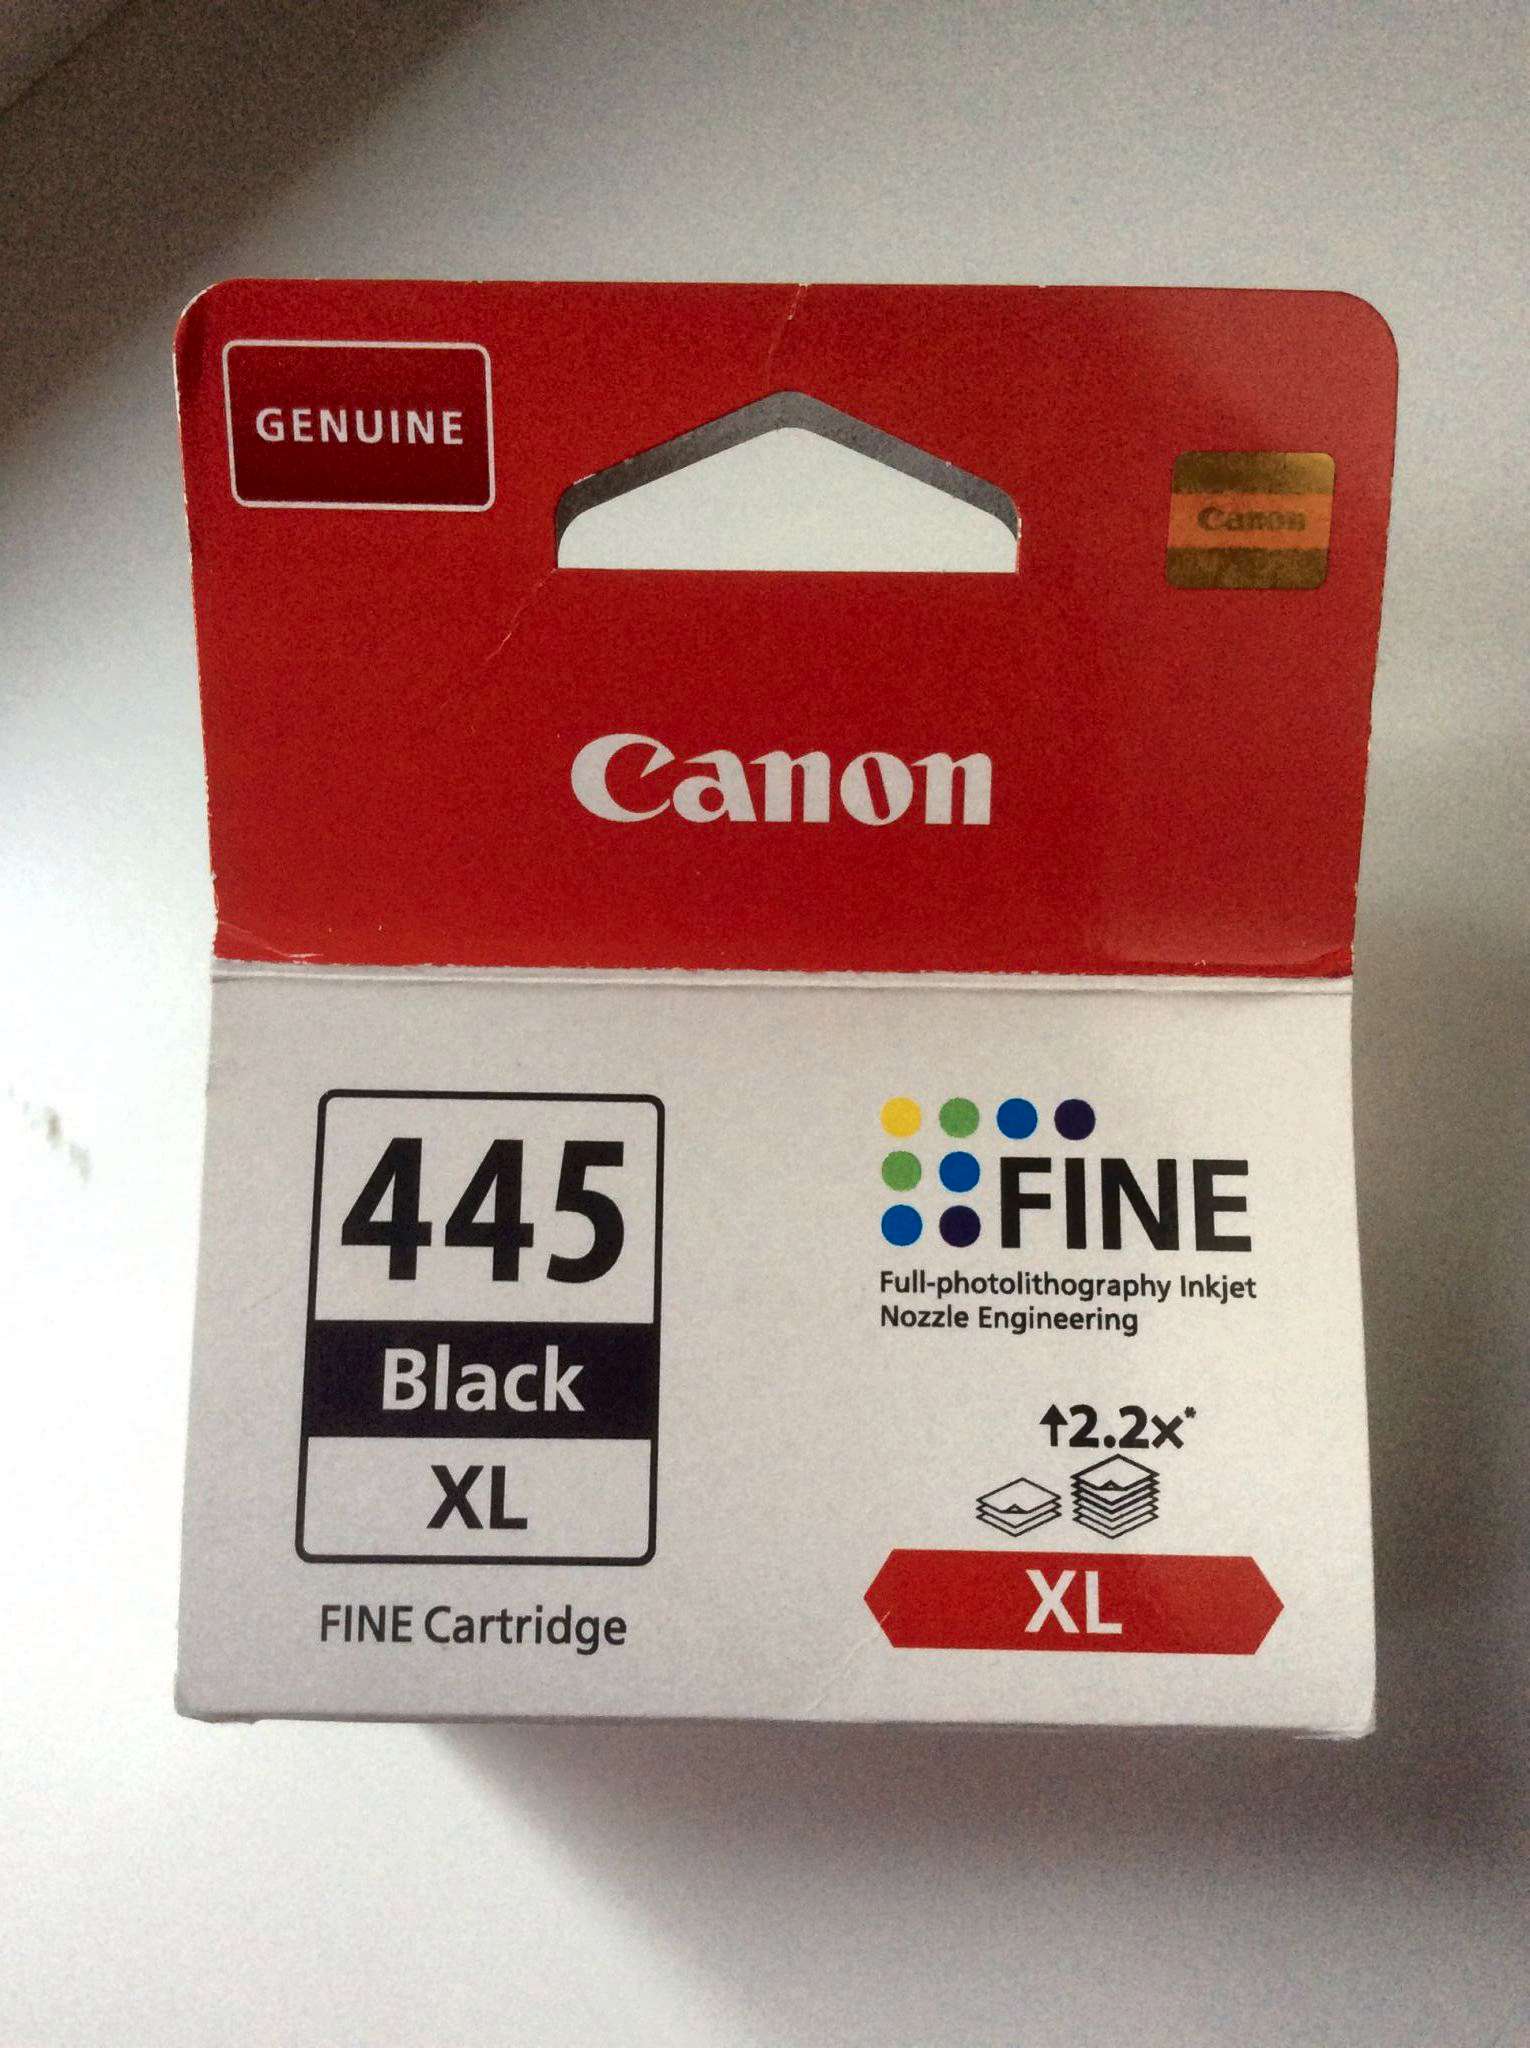 Купить картридж для принтера pg 445. Картридж 445 XL Canon. Картридж для принтера Canon PG 445. Картридж Canon PG-445xl черный. Картридж струйный Canon PG-445 черный.